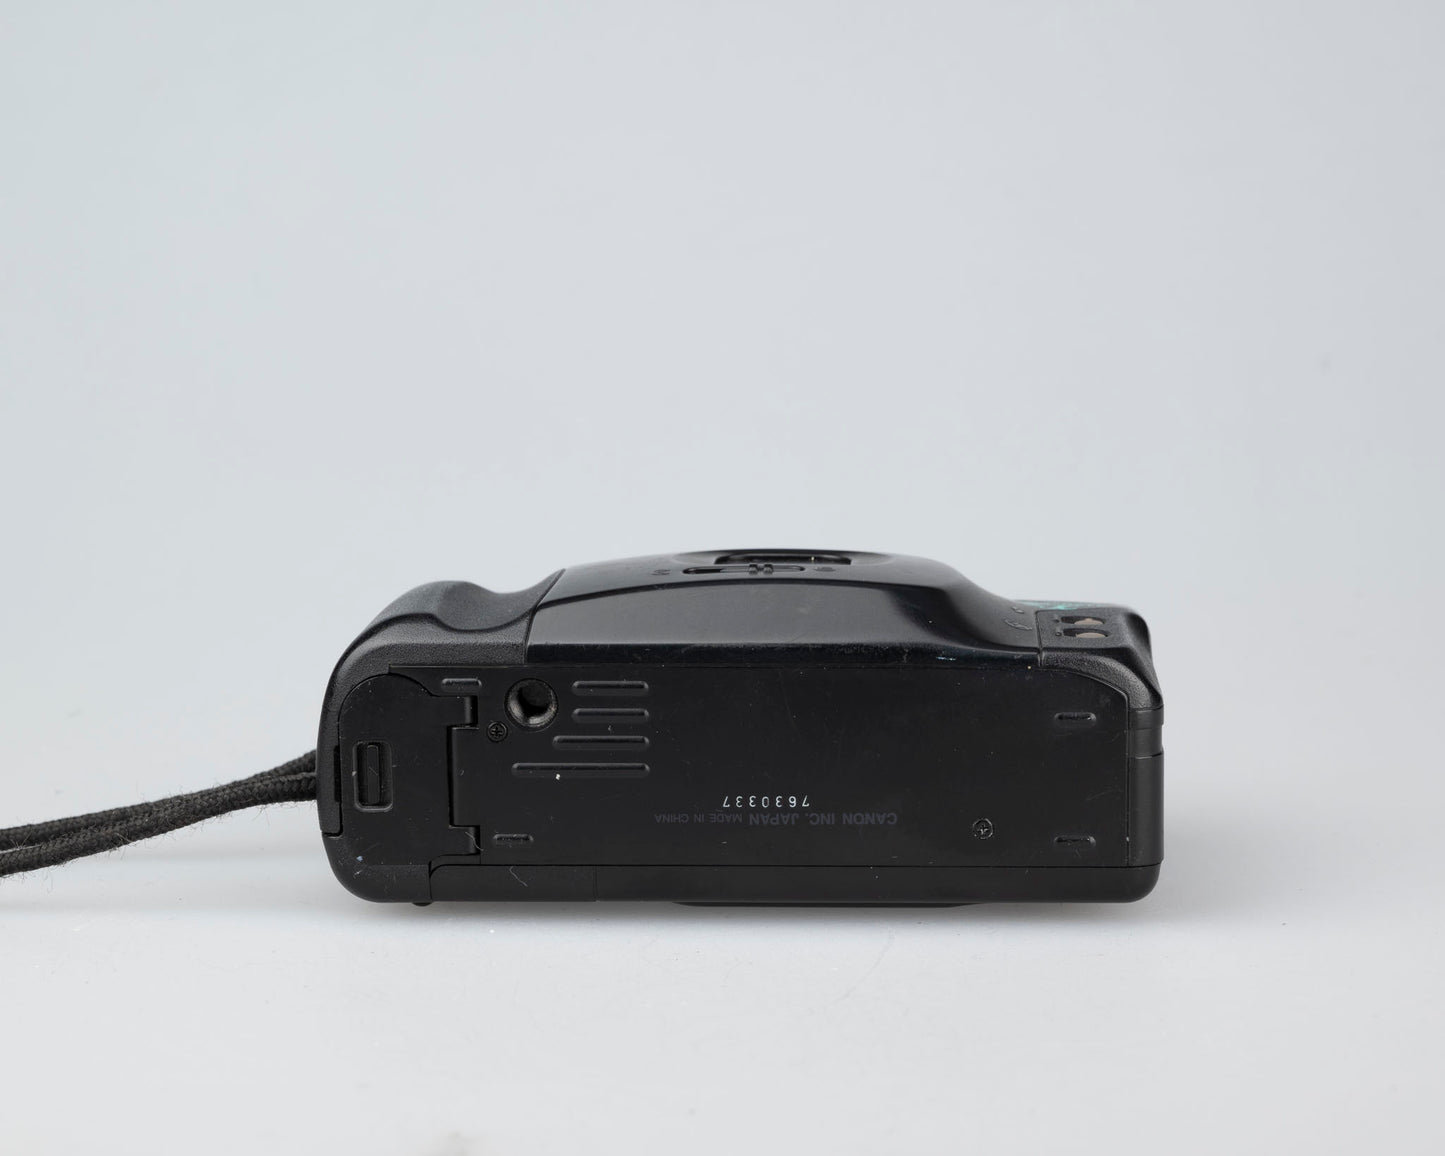 Appareil photo Canon Snappy LX Date 35 mm avec manuel